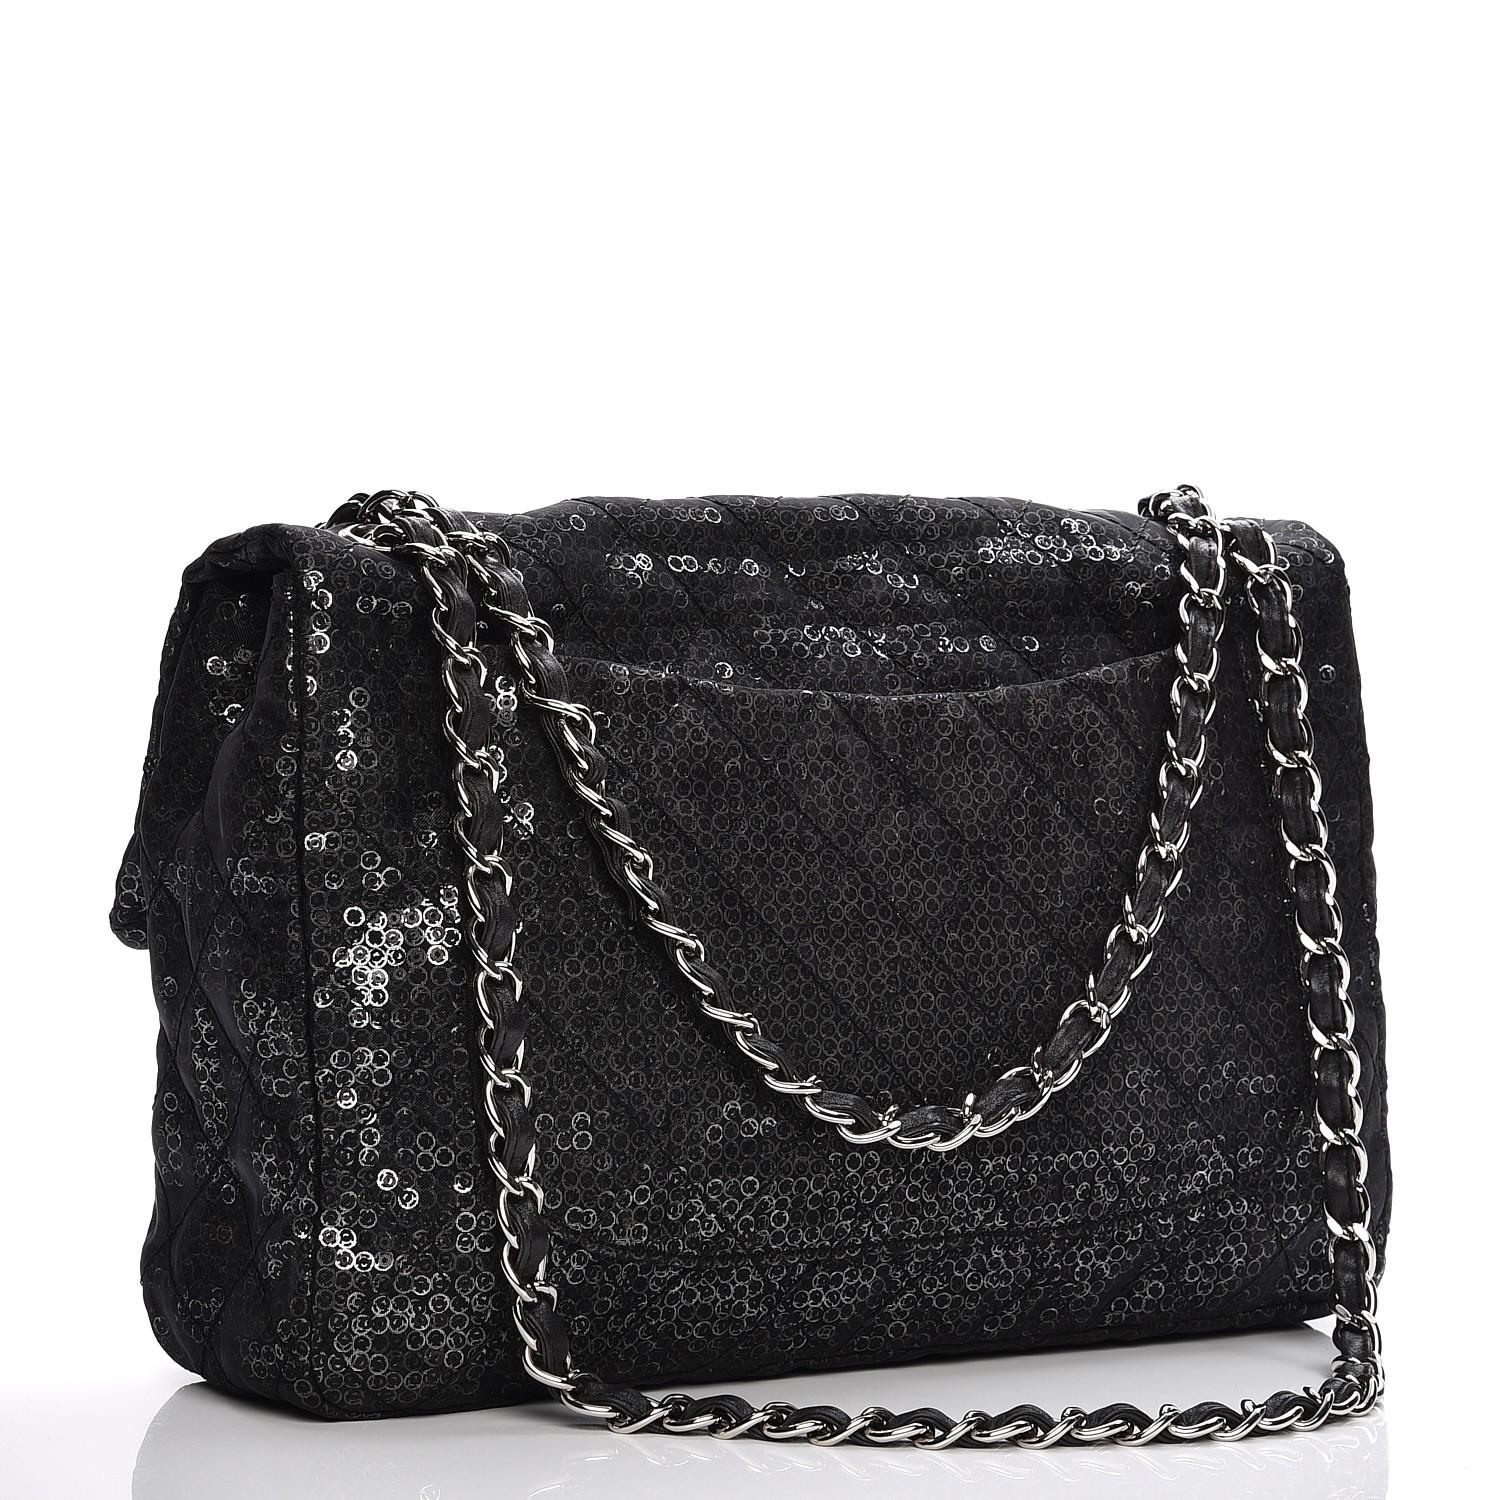 Chanel 2009 Jumbo Quilted Classic Flap Hidden Mesh Black Sequins Shoulder Bag For Sale 1